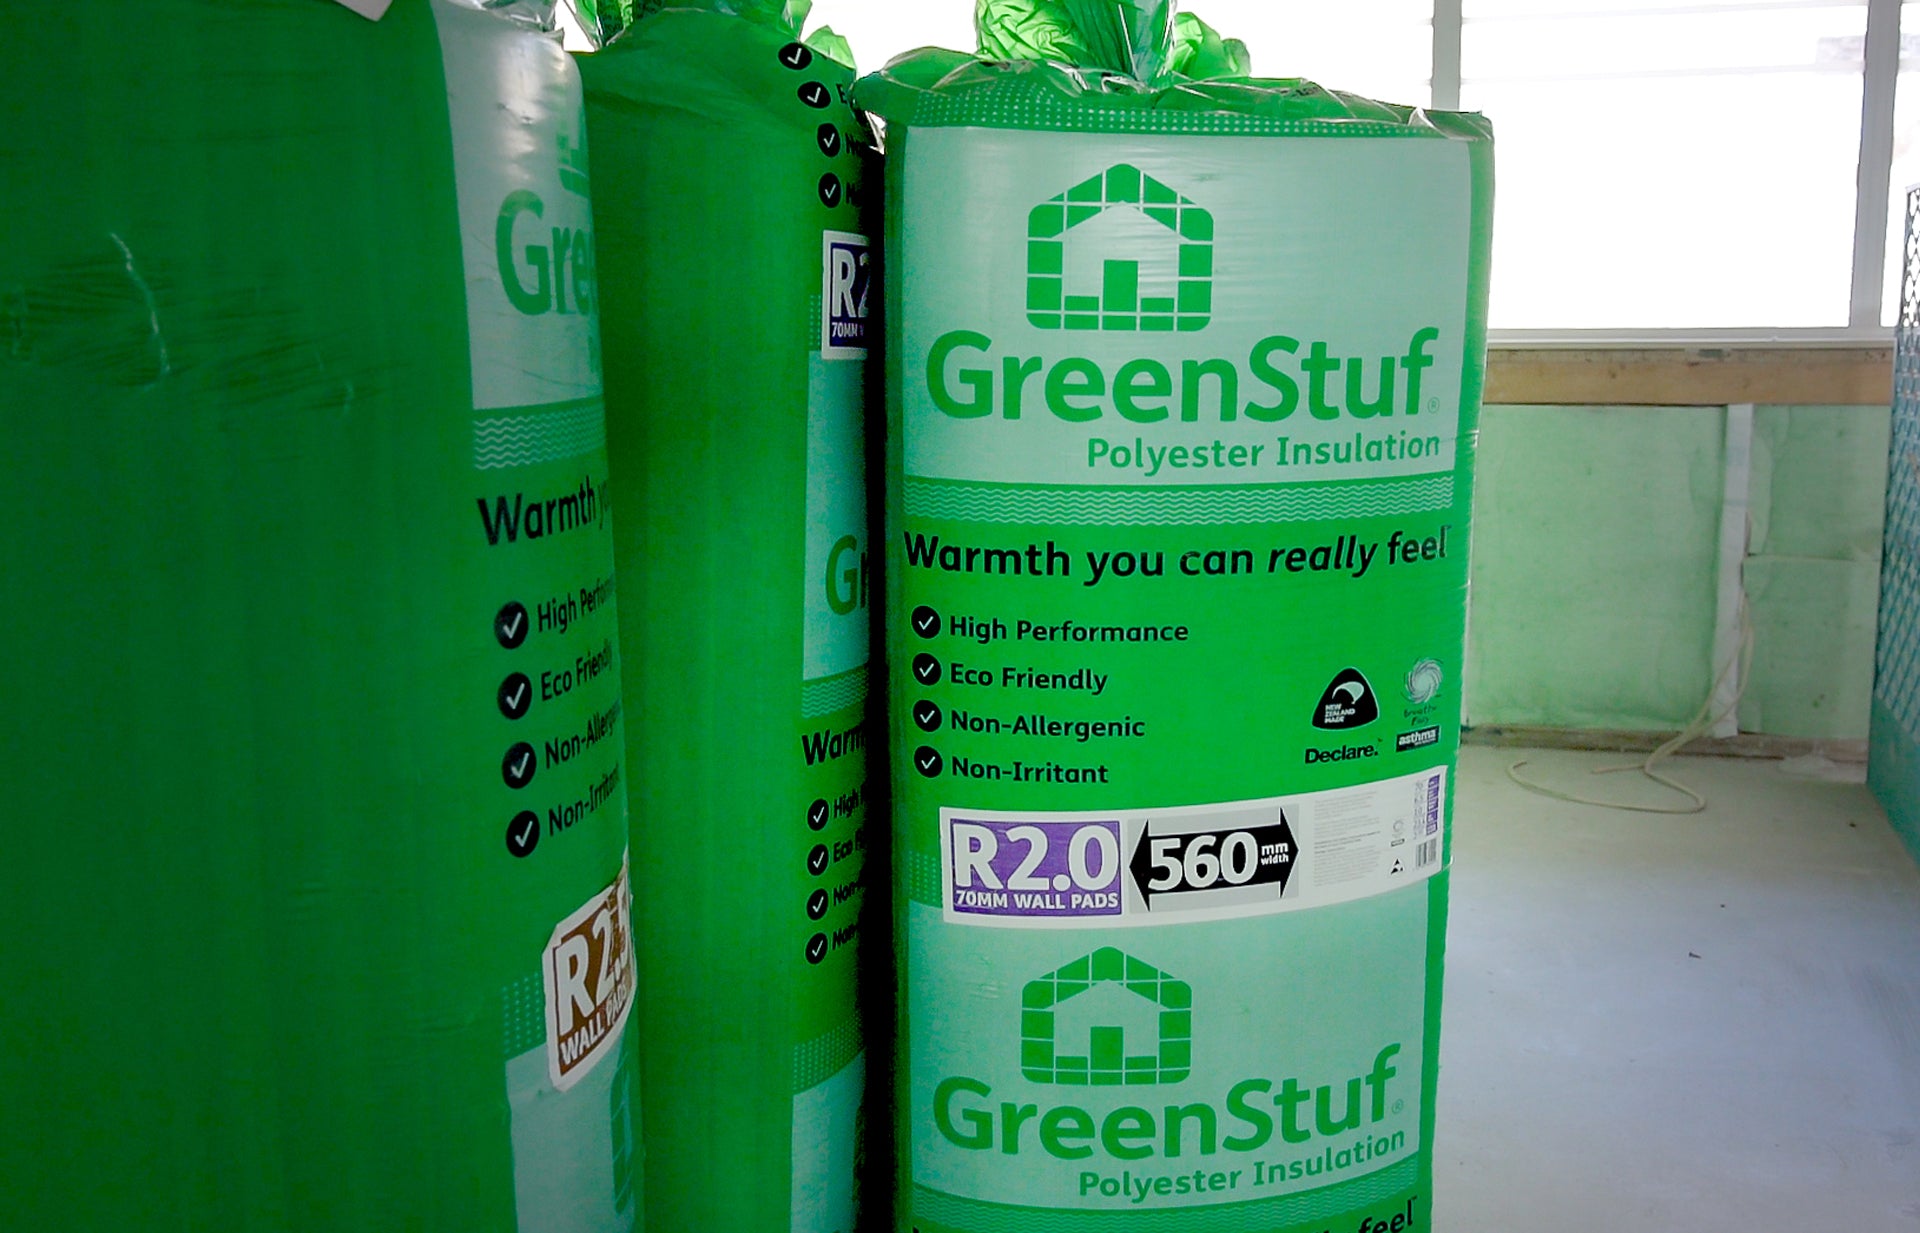 AUT North Campus & product stewardship with GreenStuf®